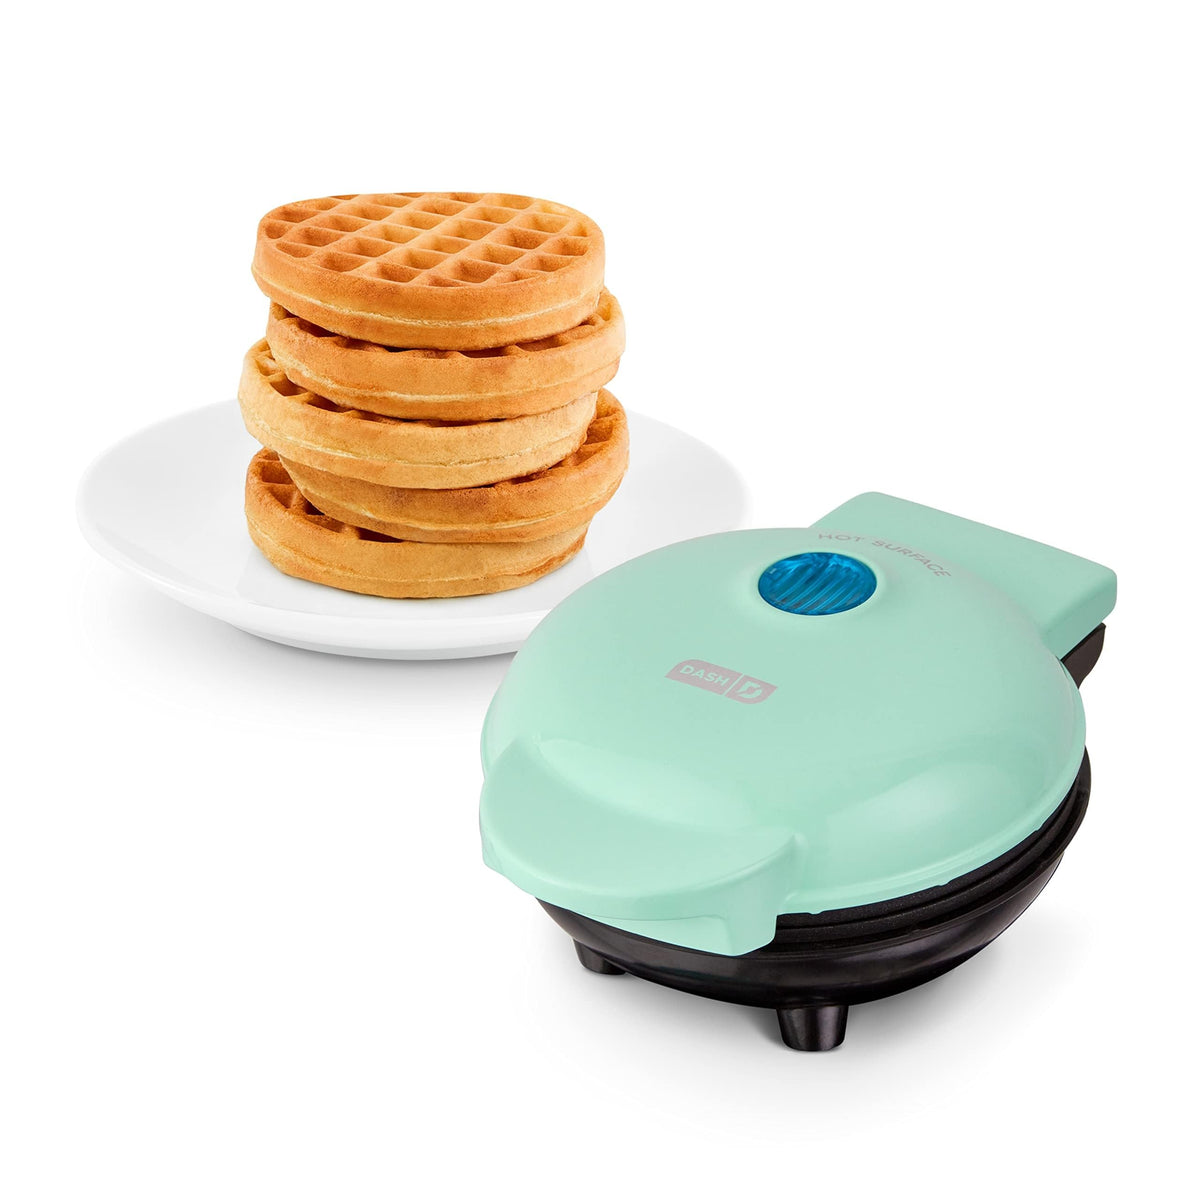 Dash Mini Waffle Maker 4 inch 350 Watts (Aqua) |No 1 Brand in US| Non-Stick Waffle Maker Machine inc 1 Yr Warranty | Dual Side Heating, Easy to Store |Housewarming Gift, Wedding Gift